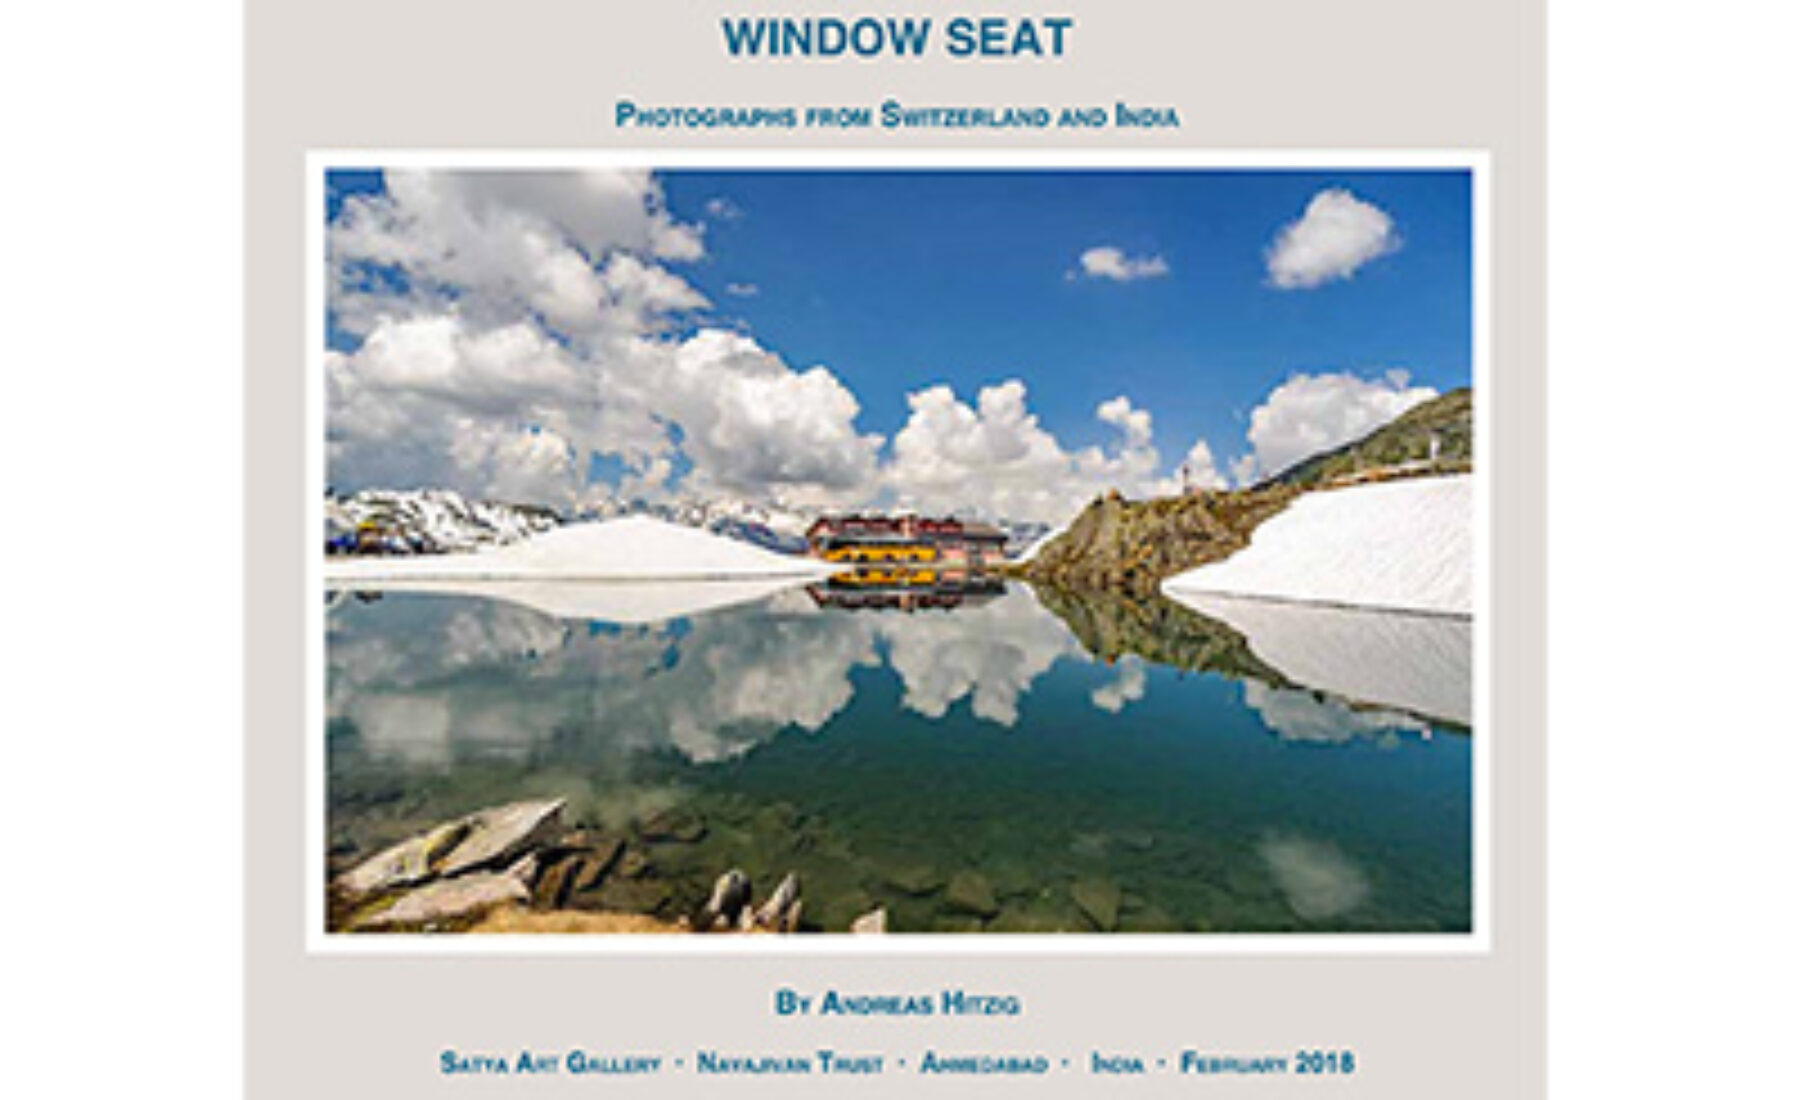 2018-02-25 Window Seat Exhibition Catalogue